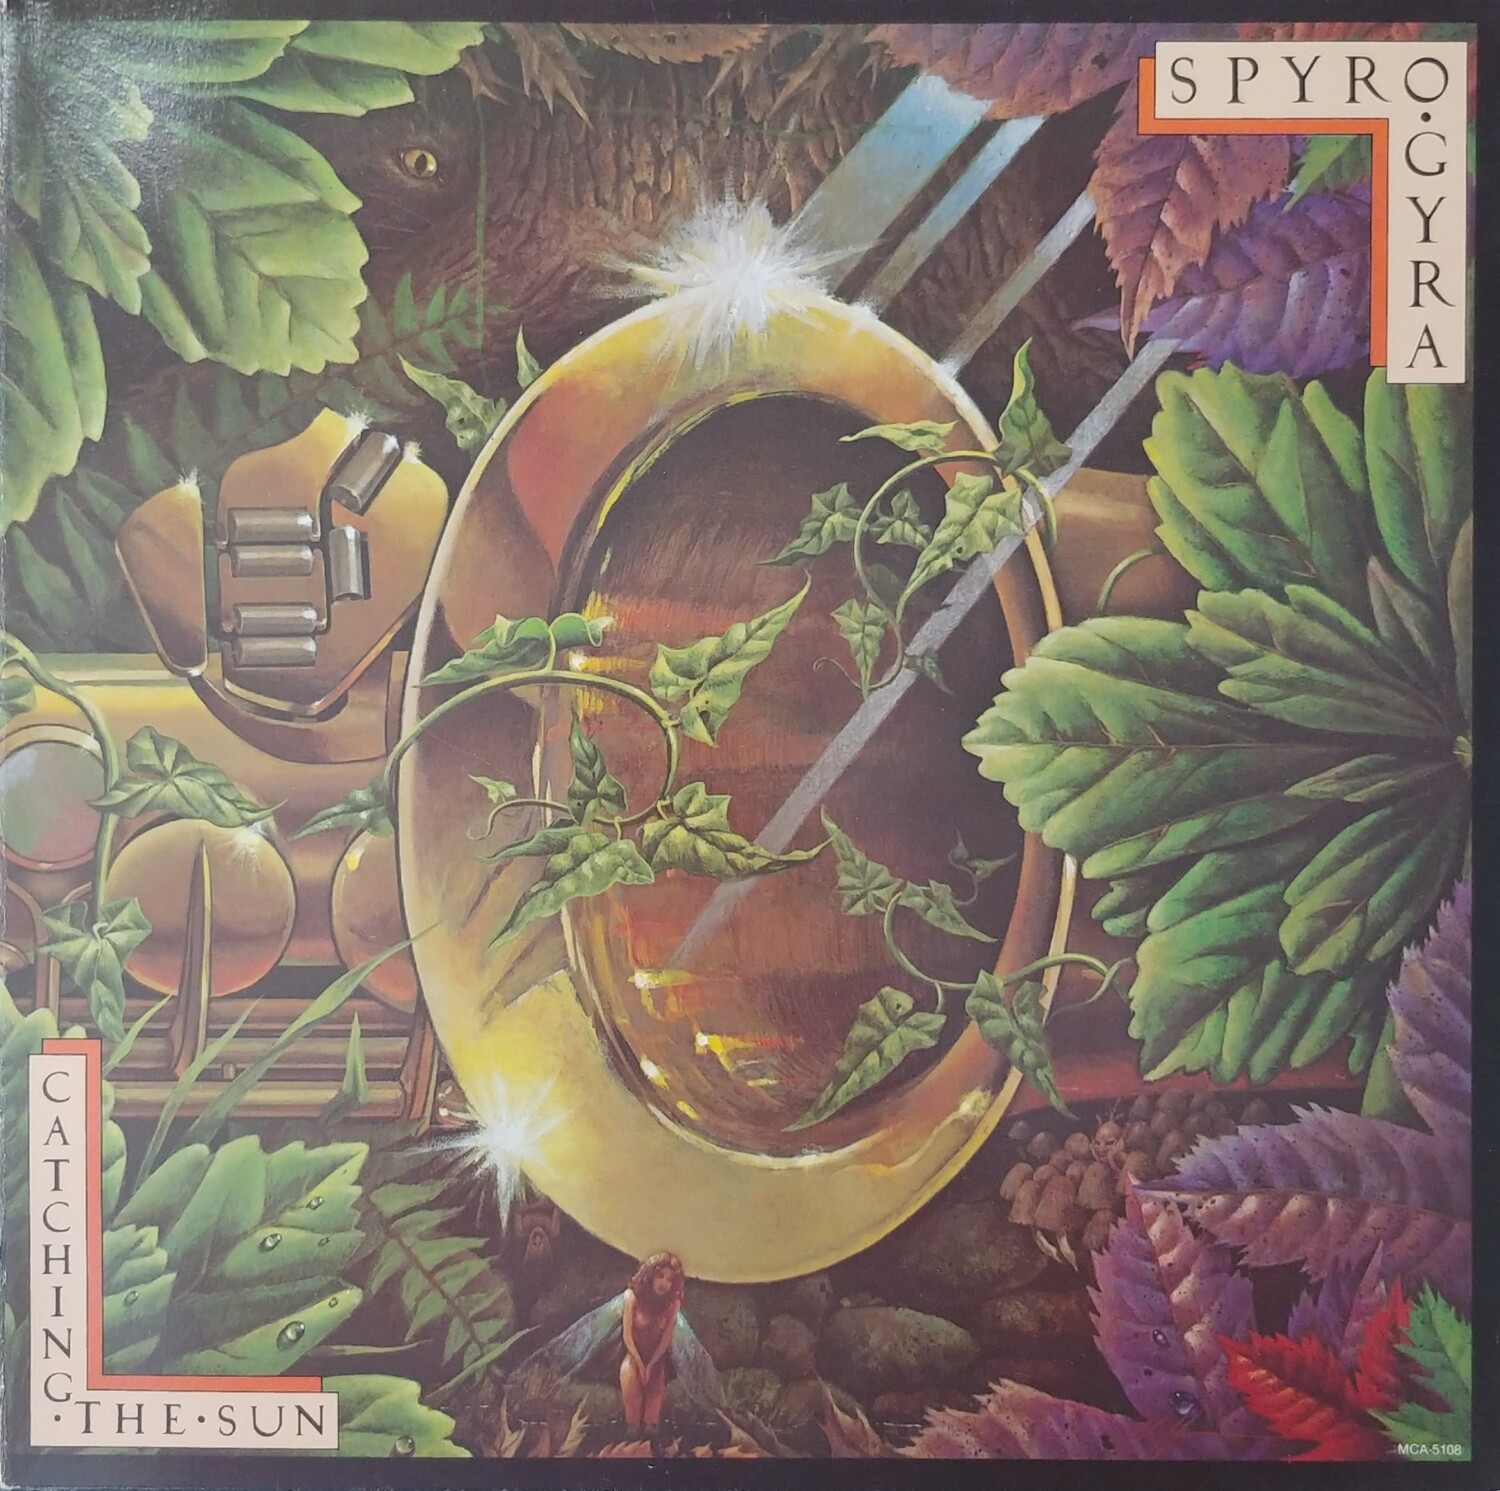 Spyro Gyra - Catching the sun